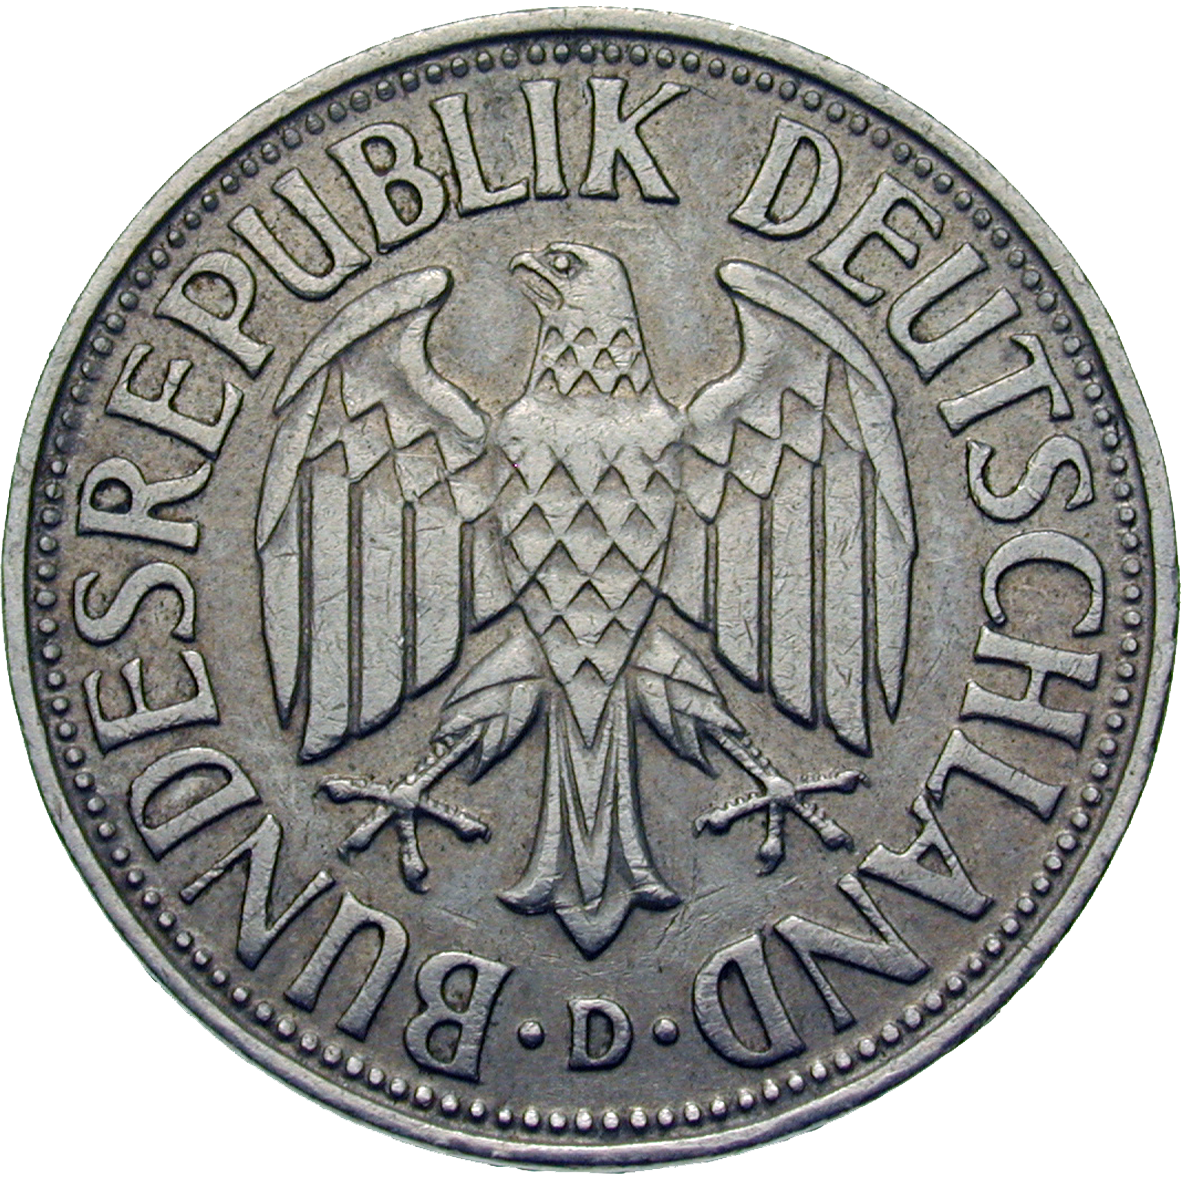 Federal Republic of Germany, 1 Deutsche Mark 1955 (obverse)